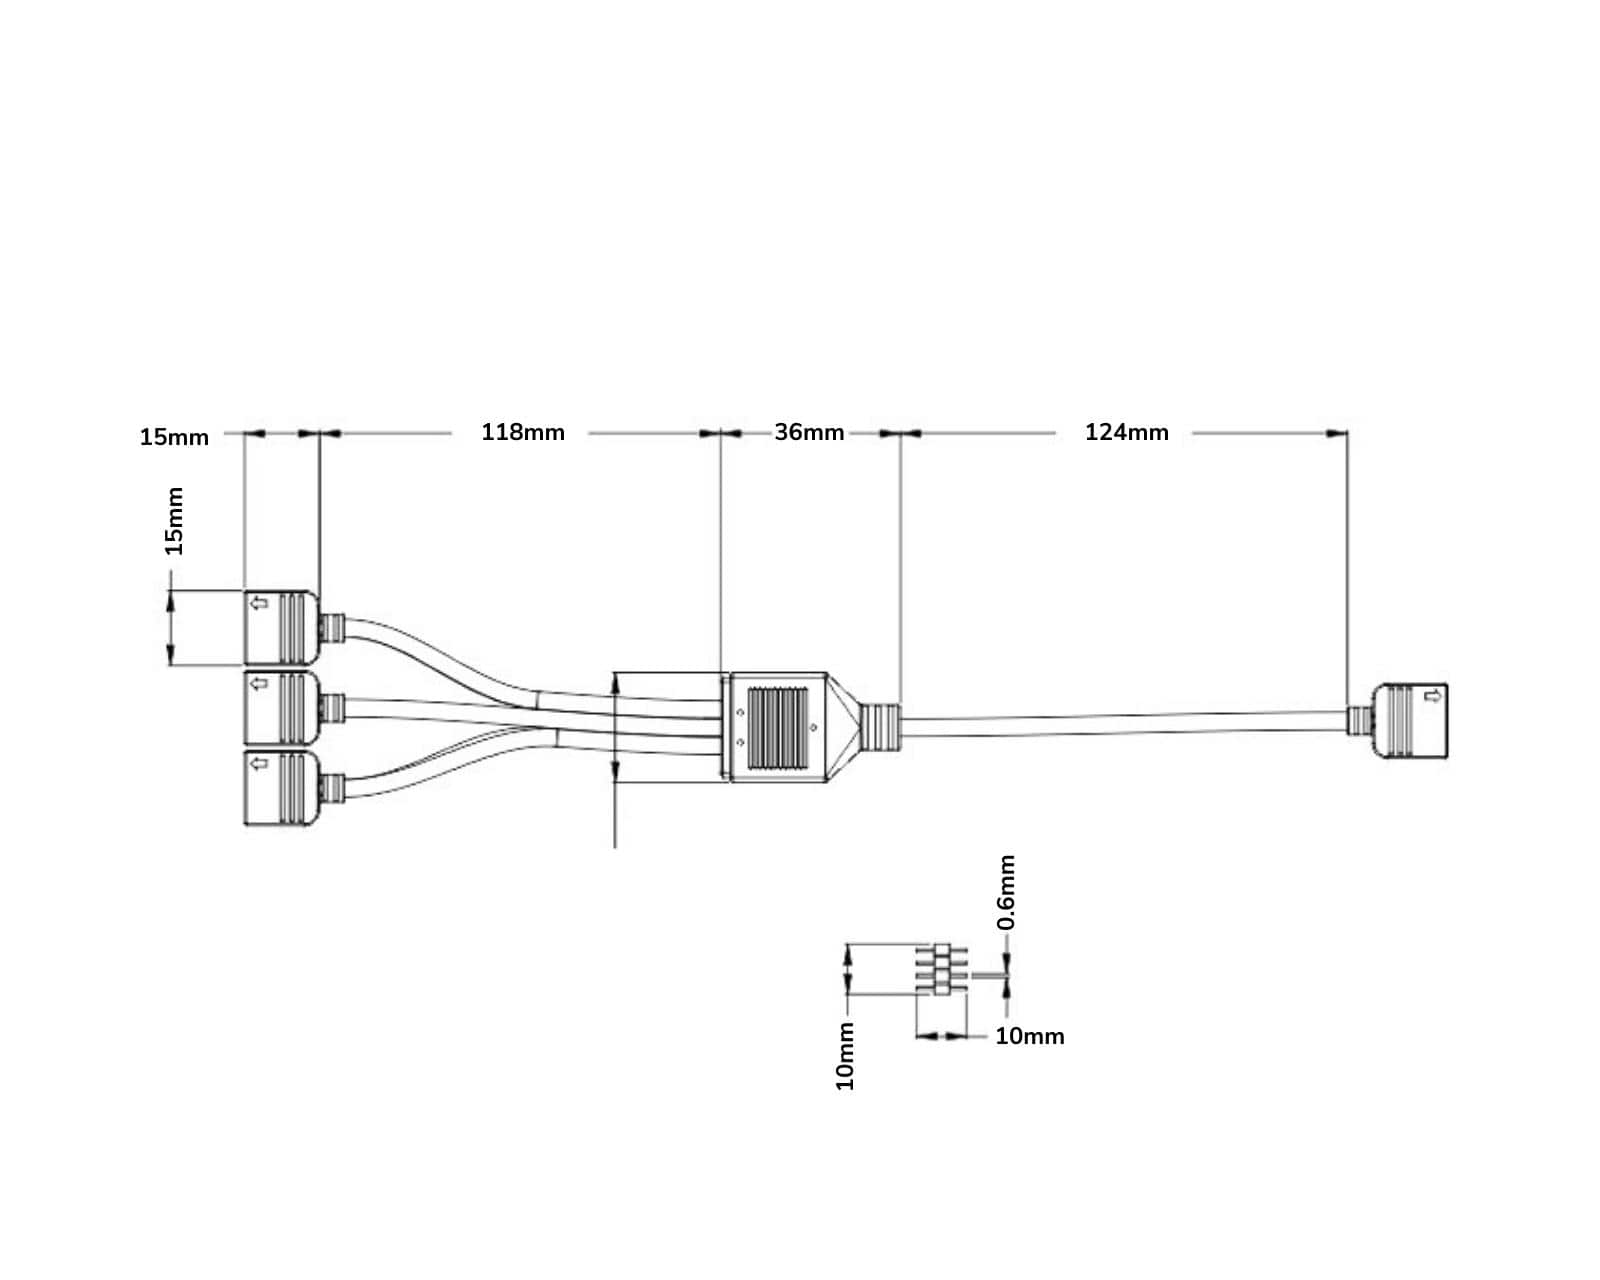 Bykski 5v / 12v Motherboard A-RGB / RGB Header 1x 6 Expansion Cable (B-1P6L-X) - PrimoChill - KEEPING IT COOL